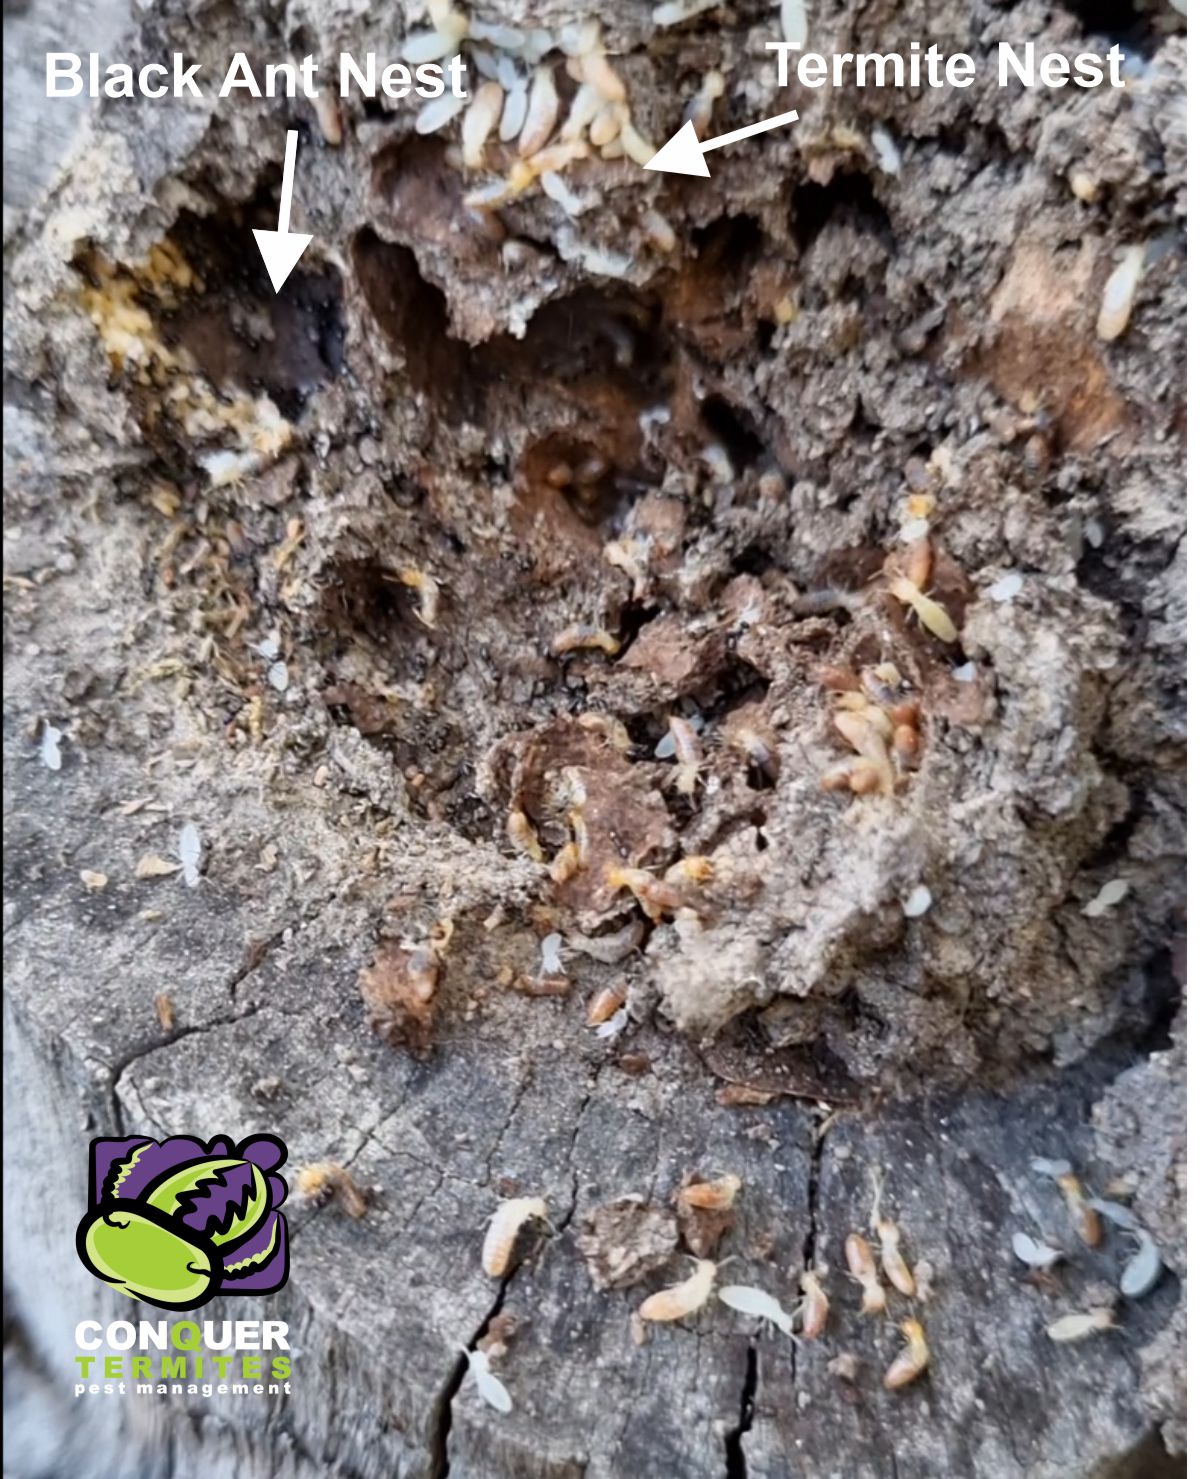 Do Black Ants keep Termites away?